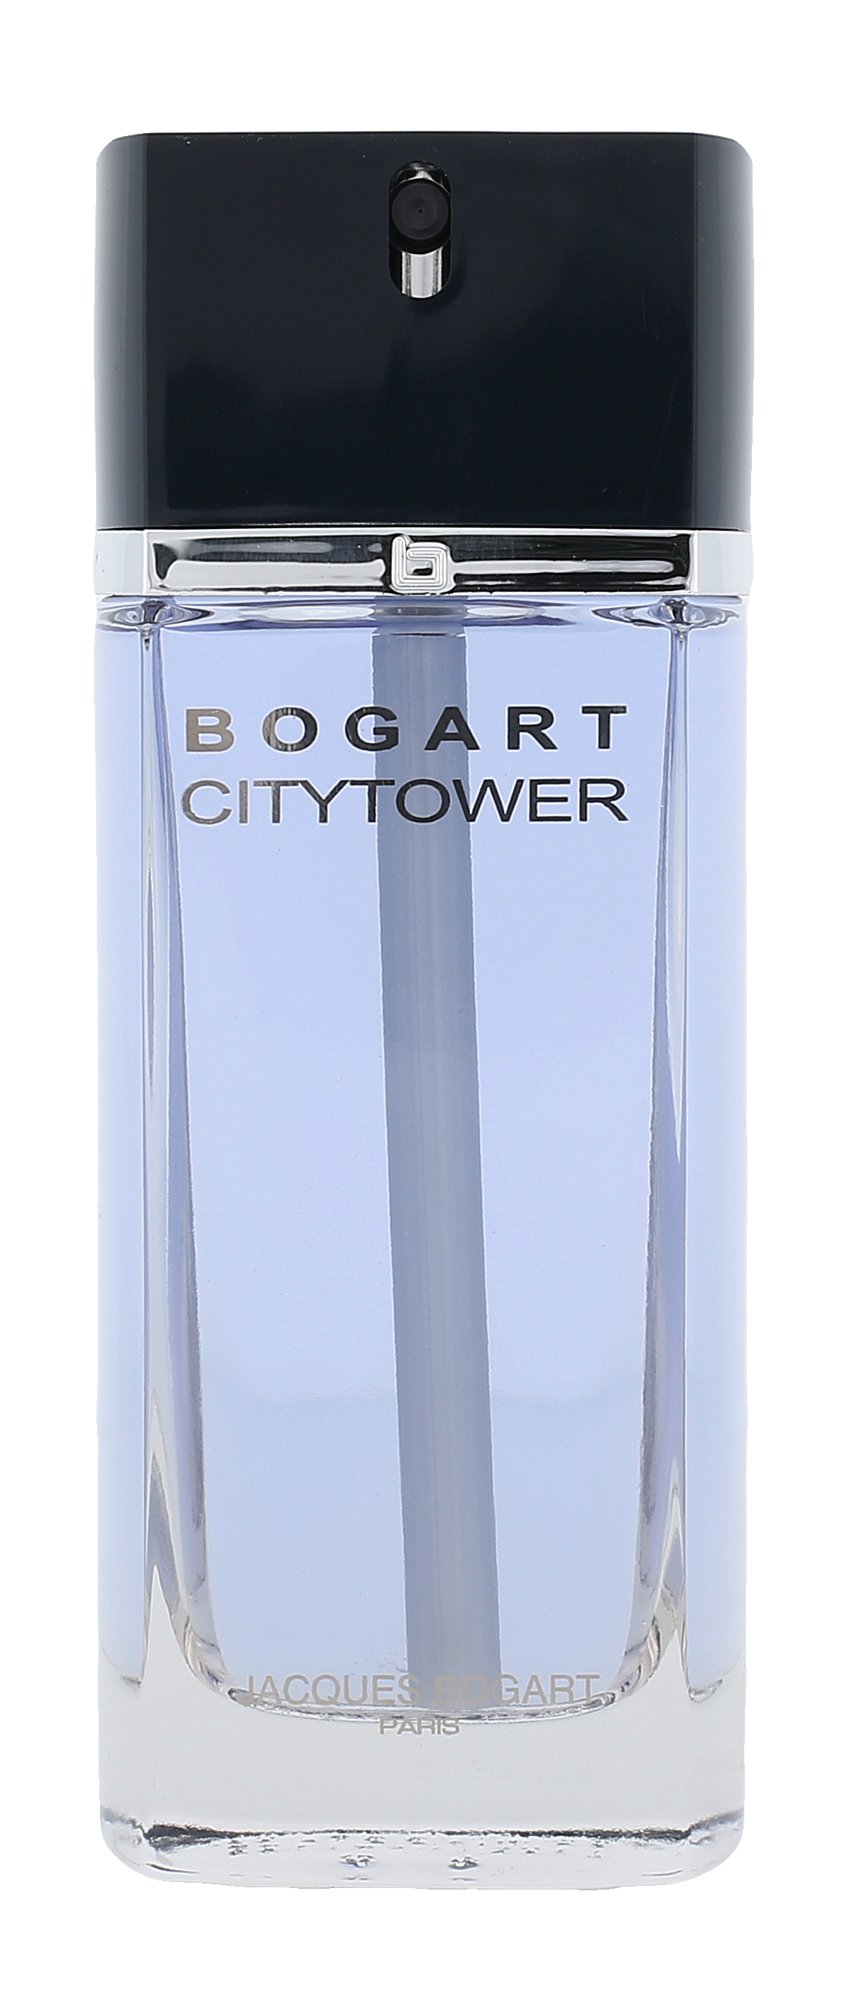 Jacques Bogart Bogart CityTower, Toaletní voda 100ml - Tester